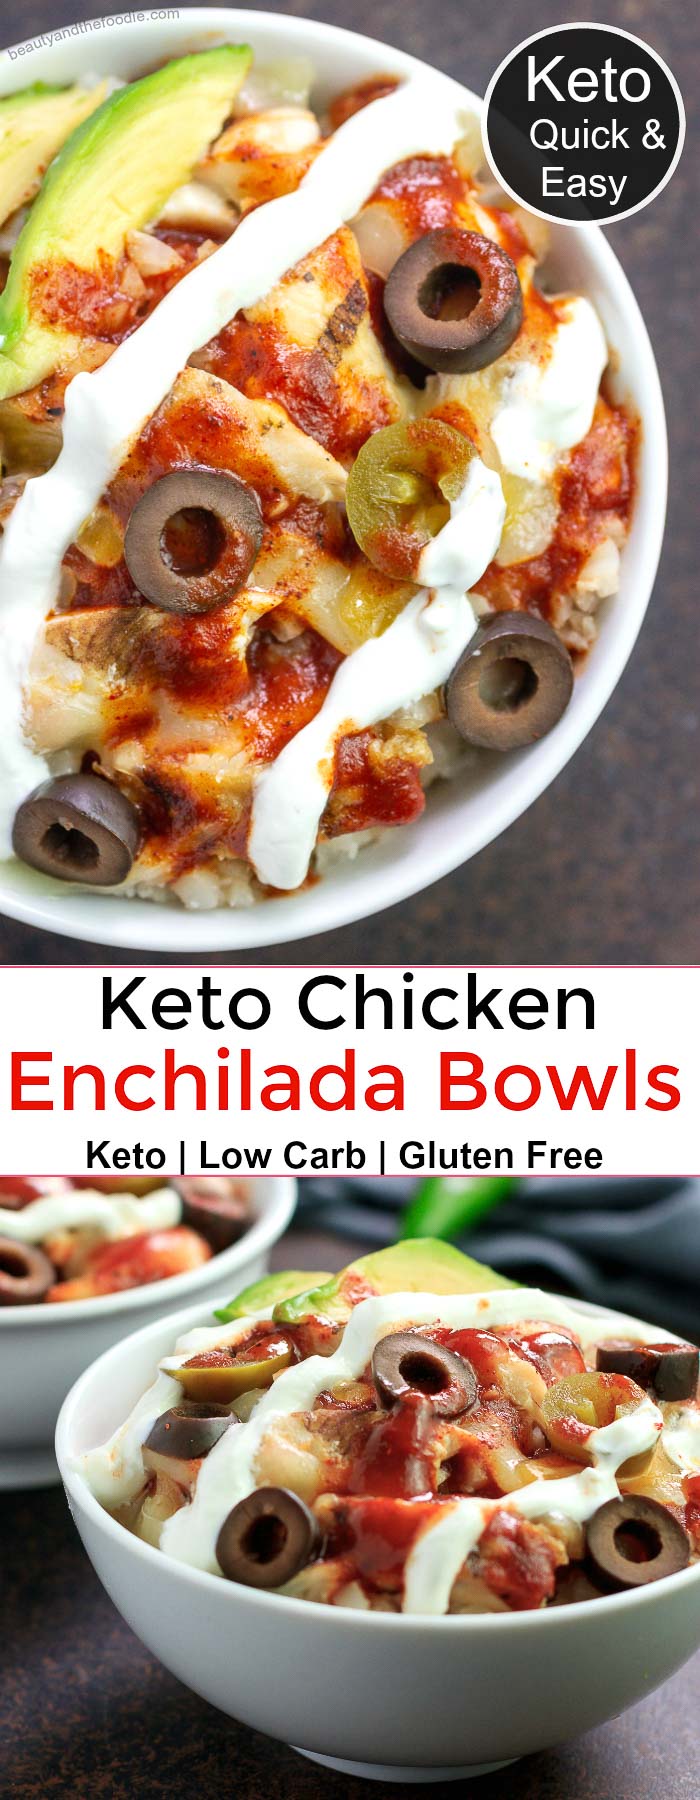 Keto Chicken Enchilada Bowls- low carb & gluten free